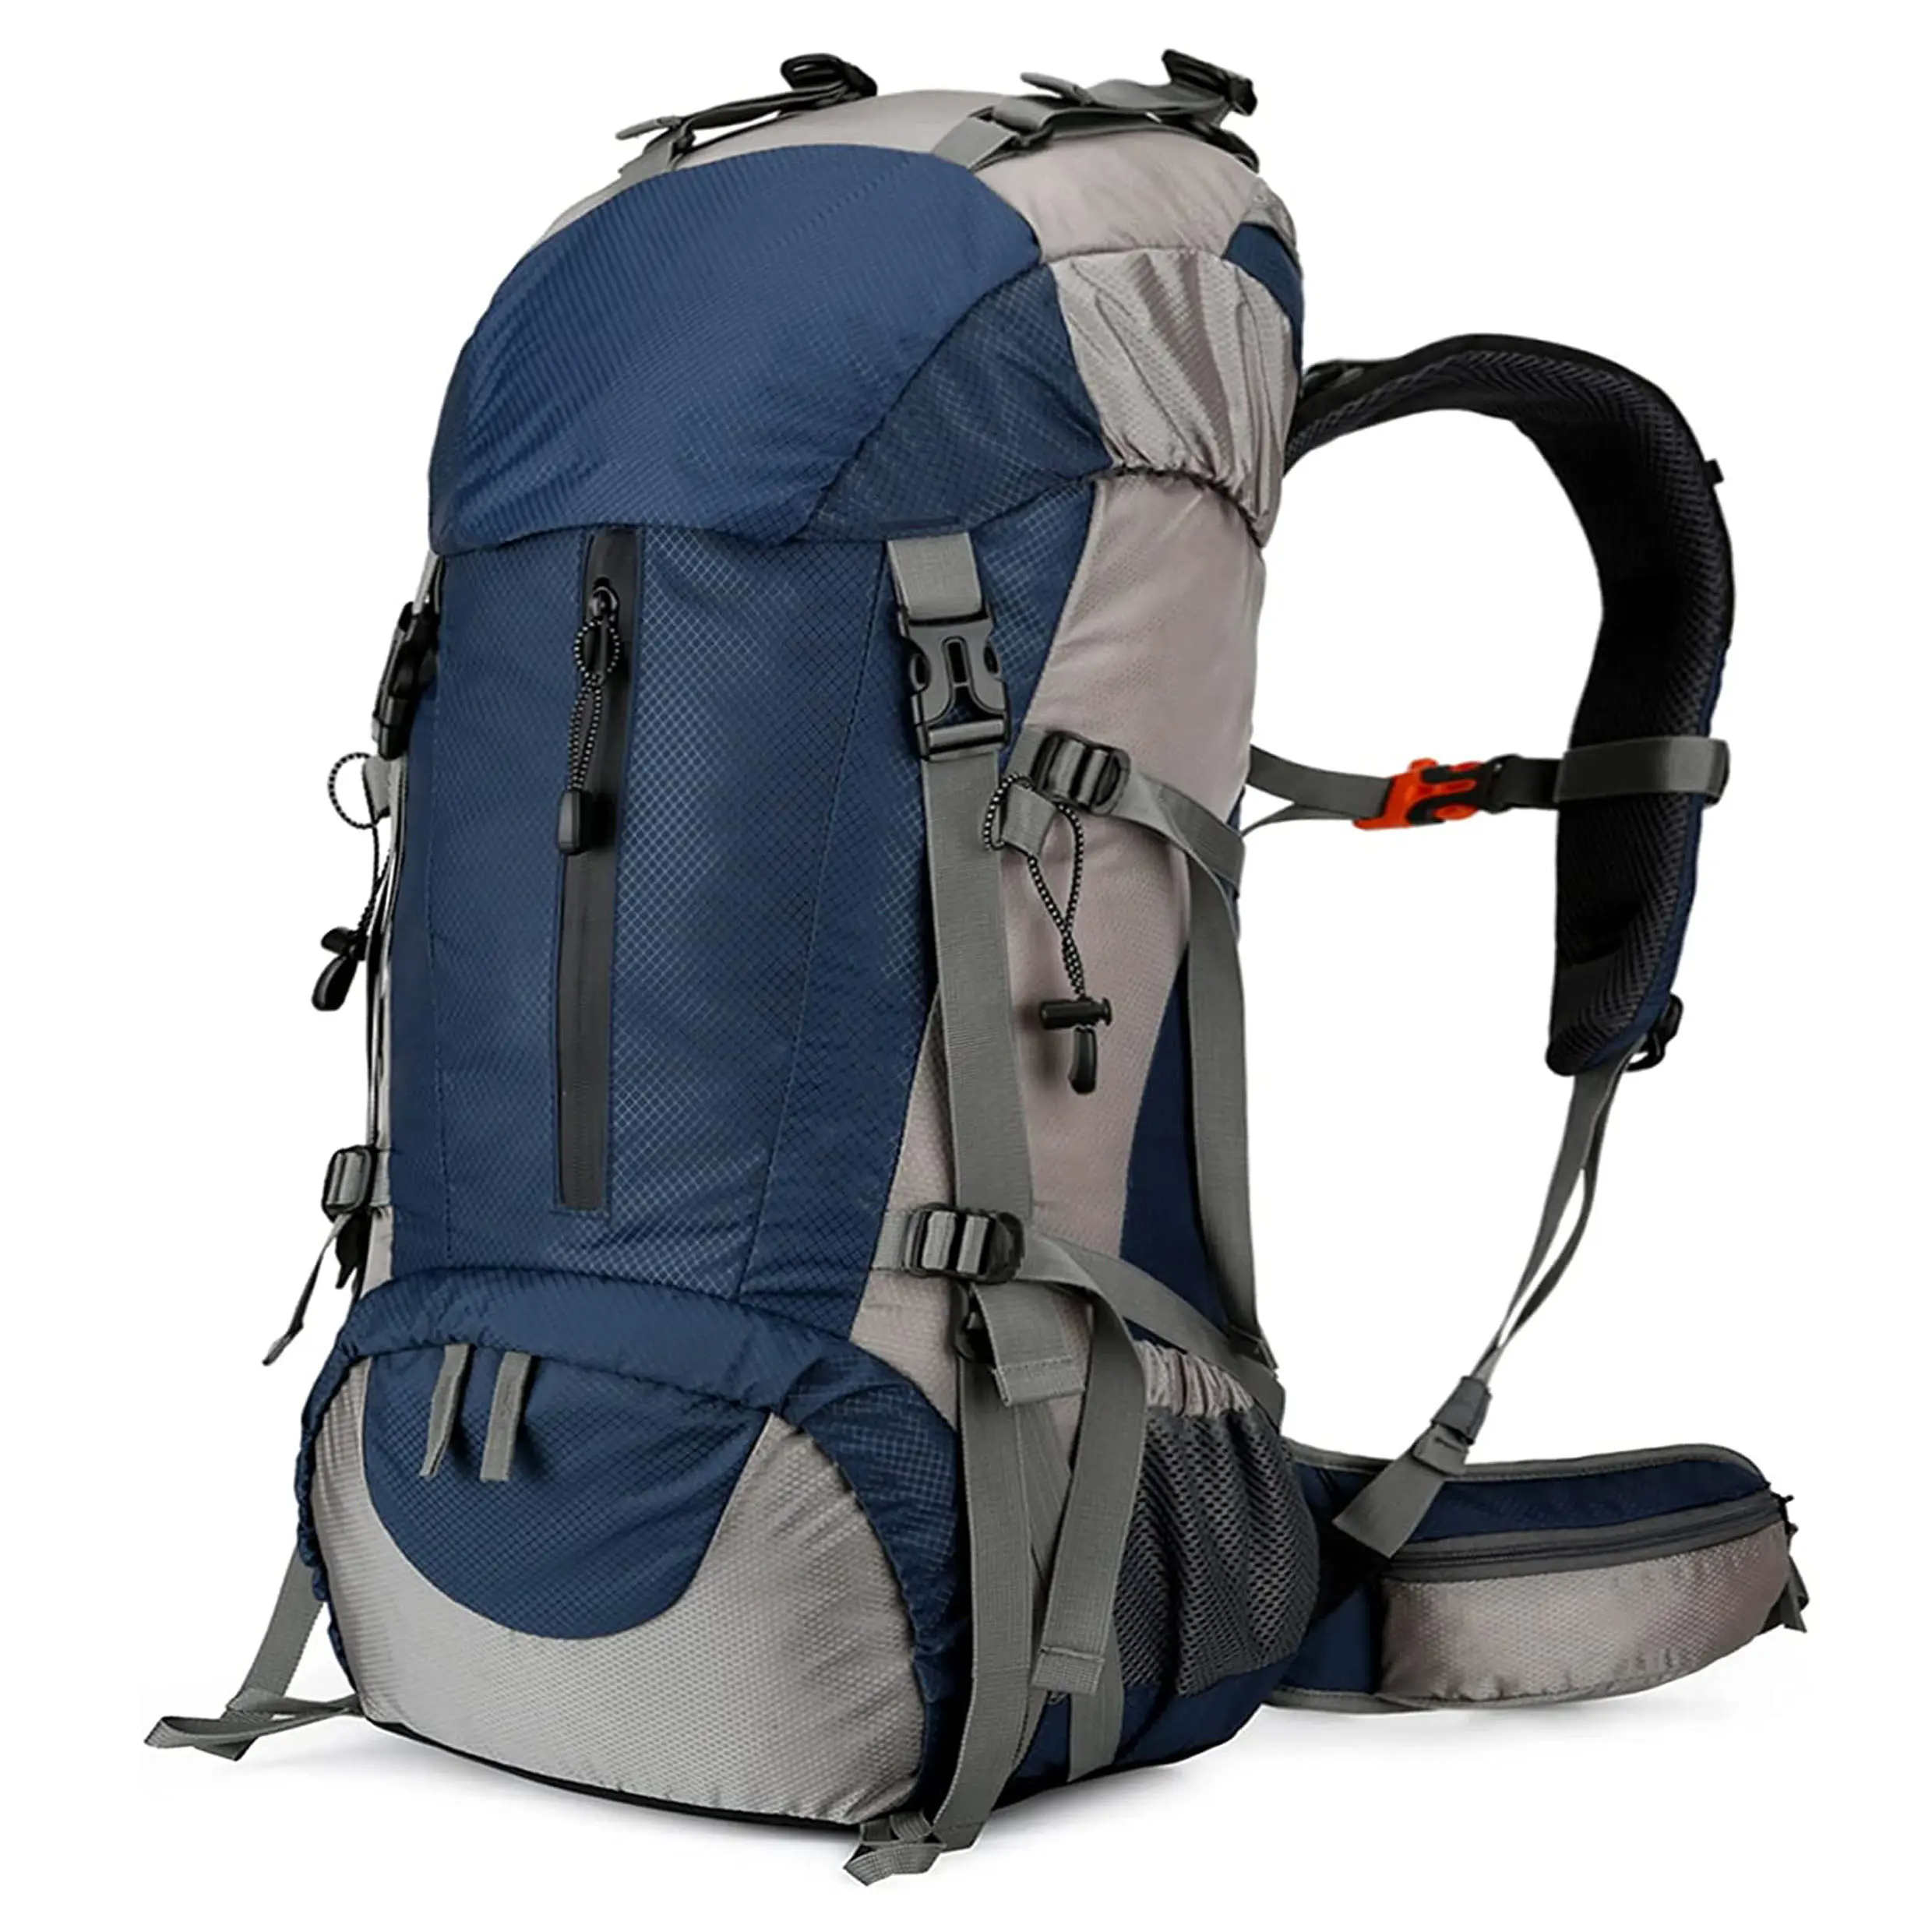 Mochila de senderismo personalizada de 50L, bolsa impermeable esencial para acampada con cubierta de lluvia, mochila ligera de 45 + 5 litros